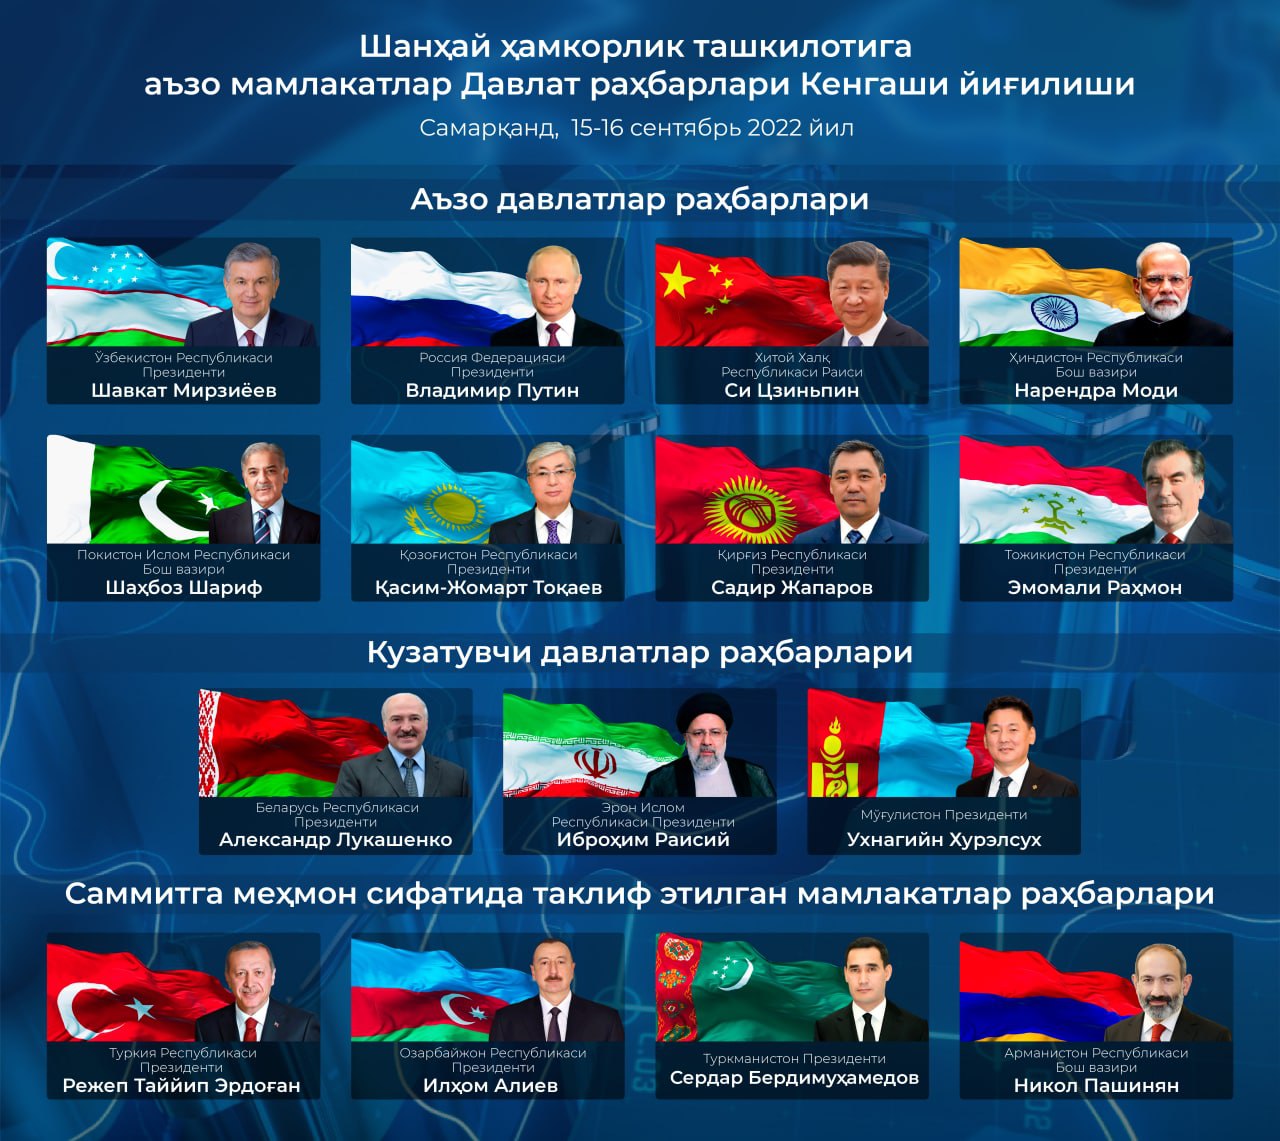 Главы государств на саммите ШОС 15–16 сентября в Самарканде